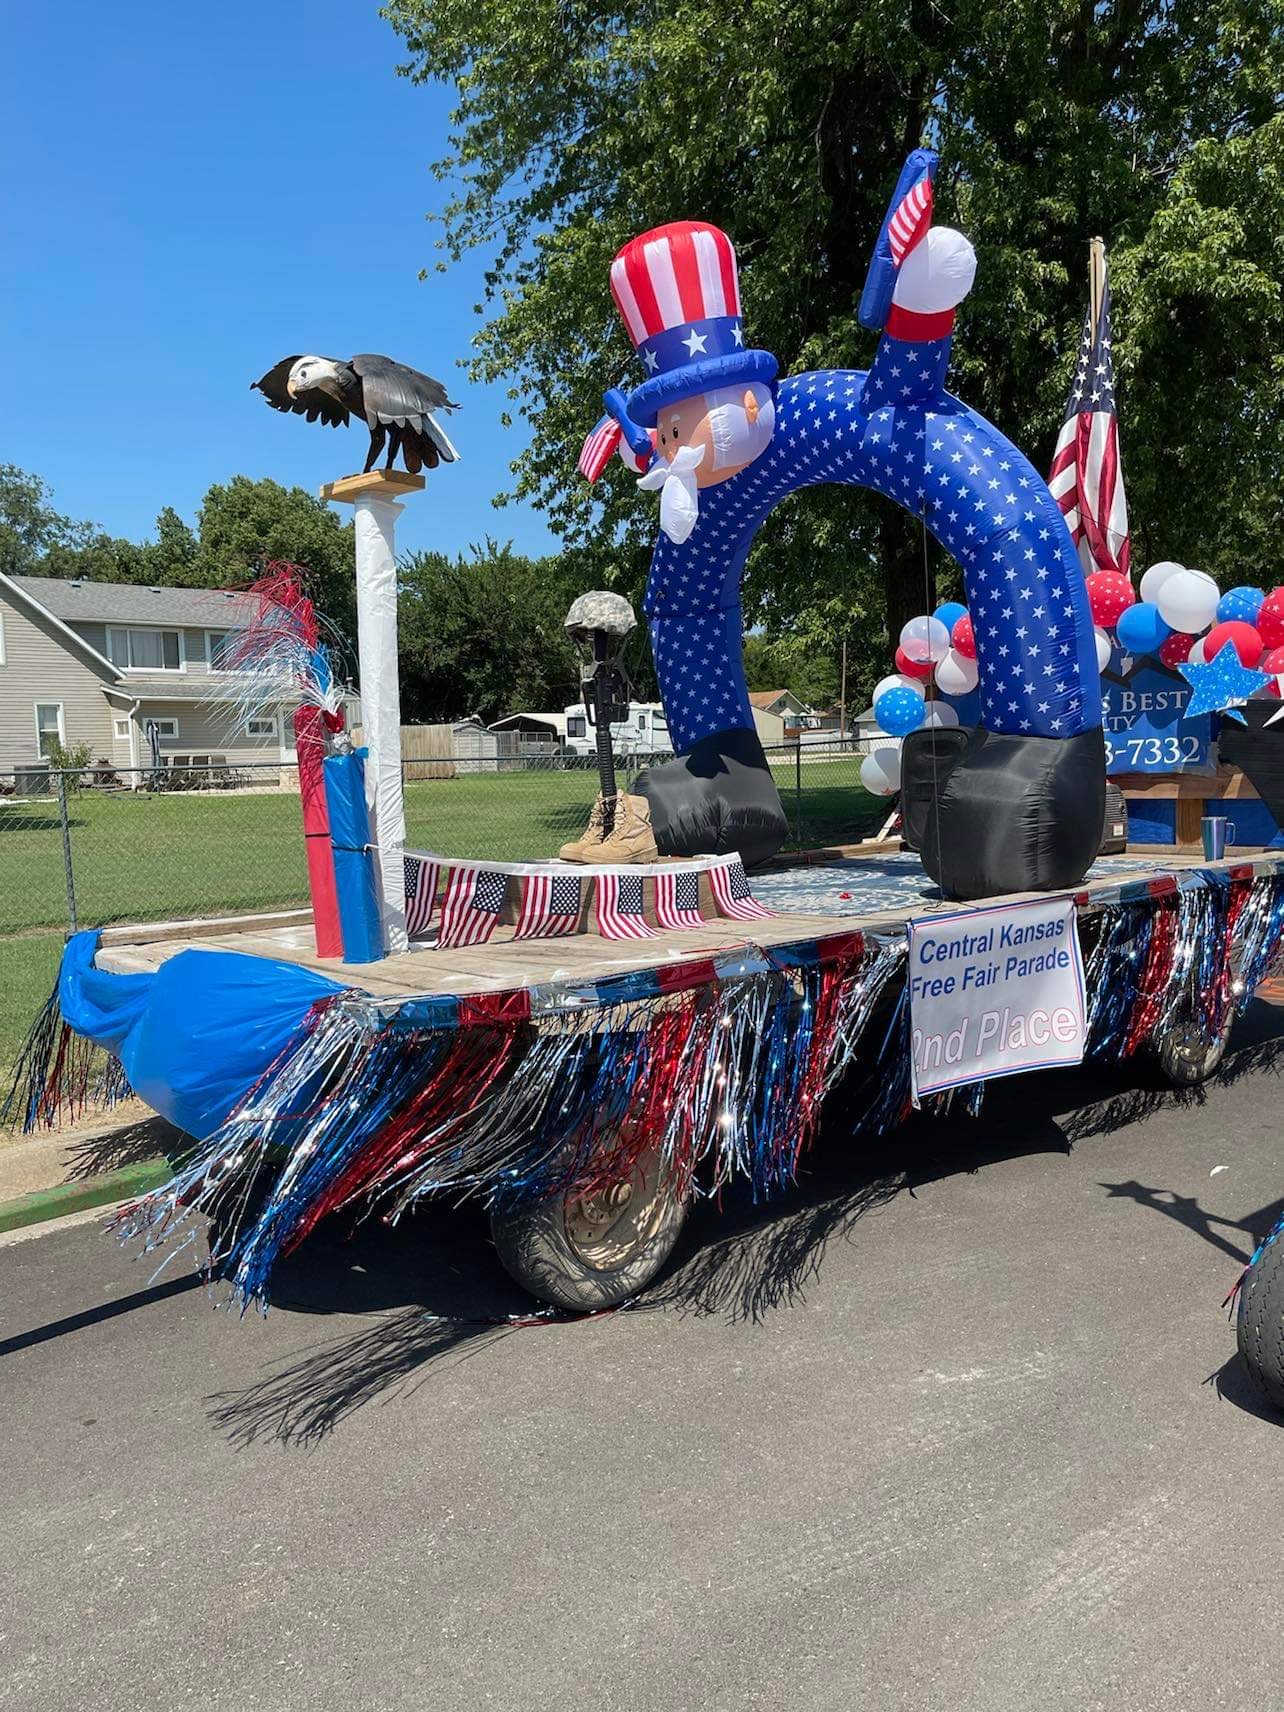 Parade – Central Kansas Free Fair